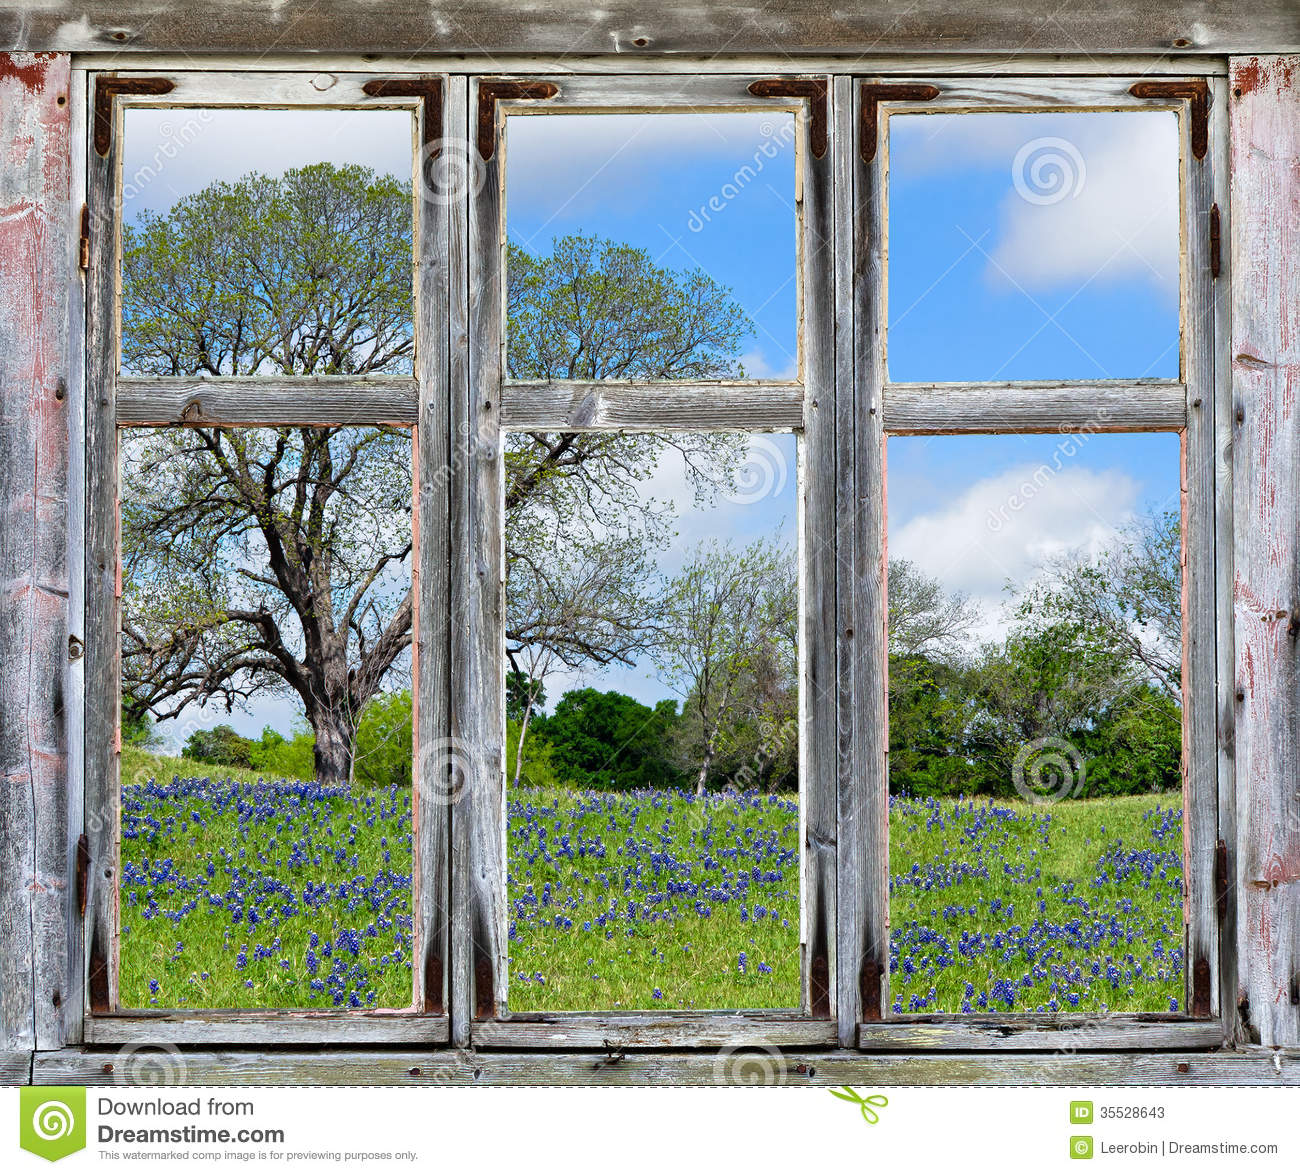     Vista With Texas Bluebonnets Seen Through An Old Rustic Window Frame